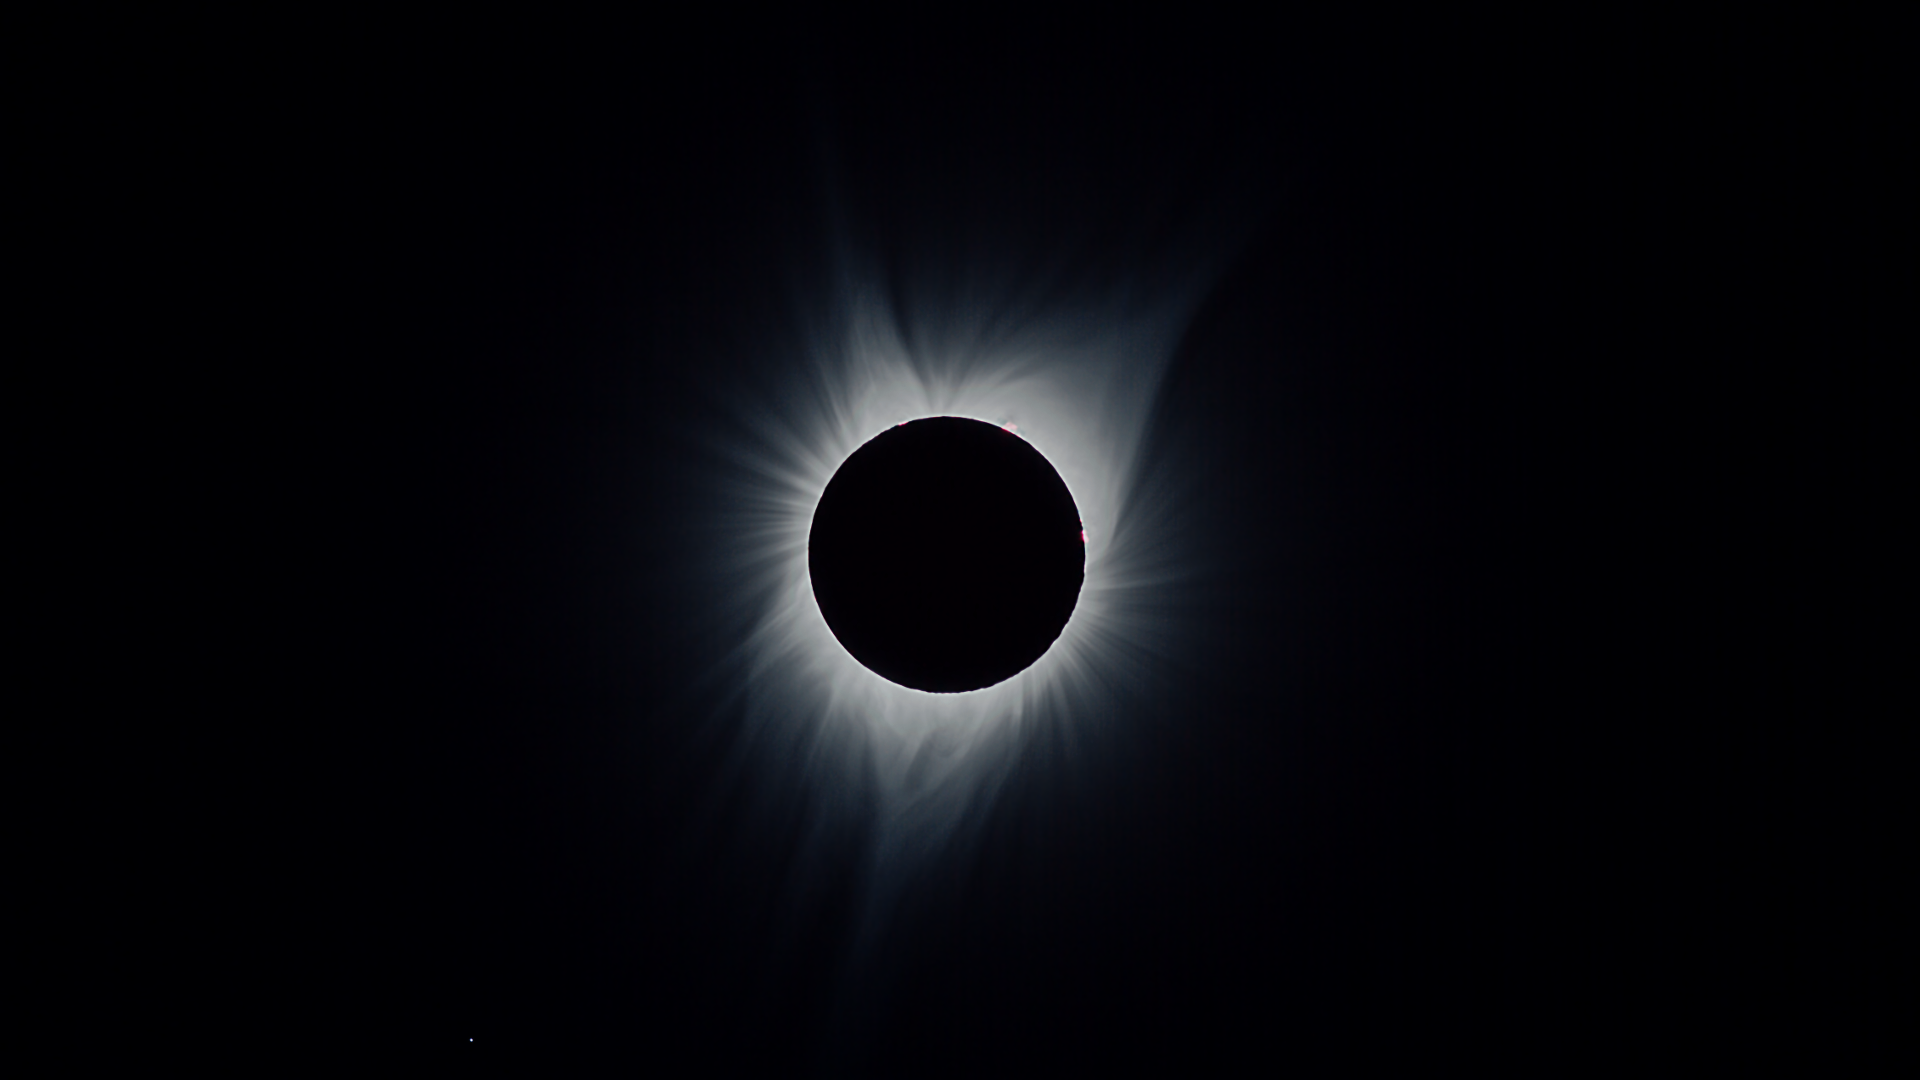 http://www.shakemid.com/pub/total_solar_eclipse_wall_1920.png